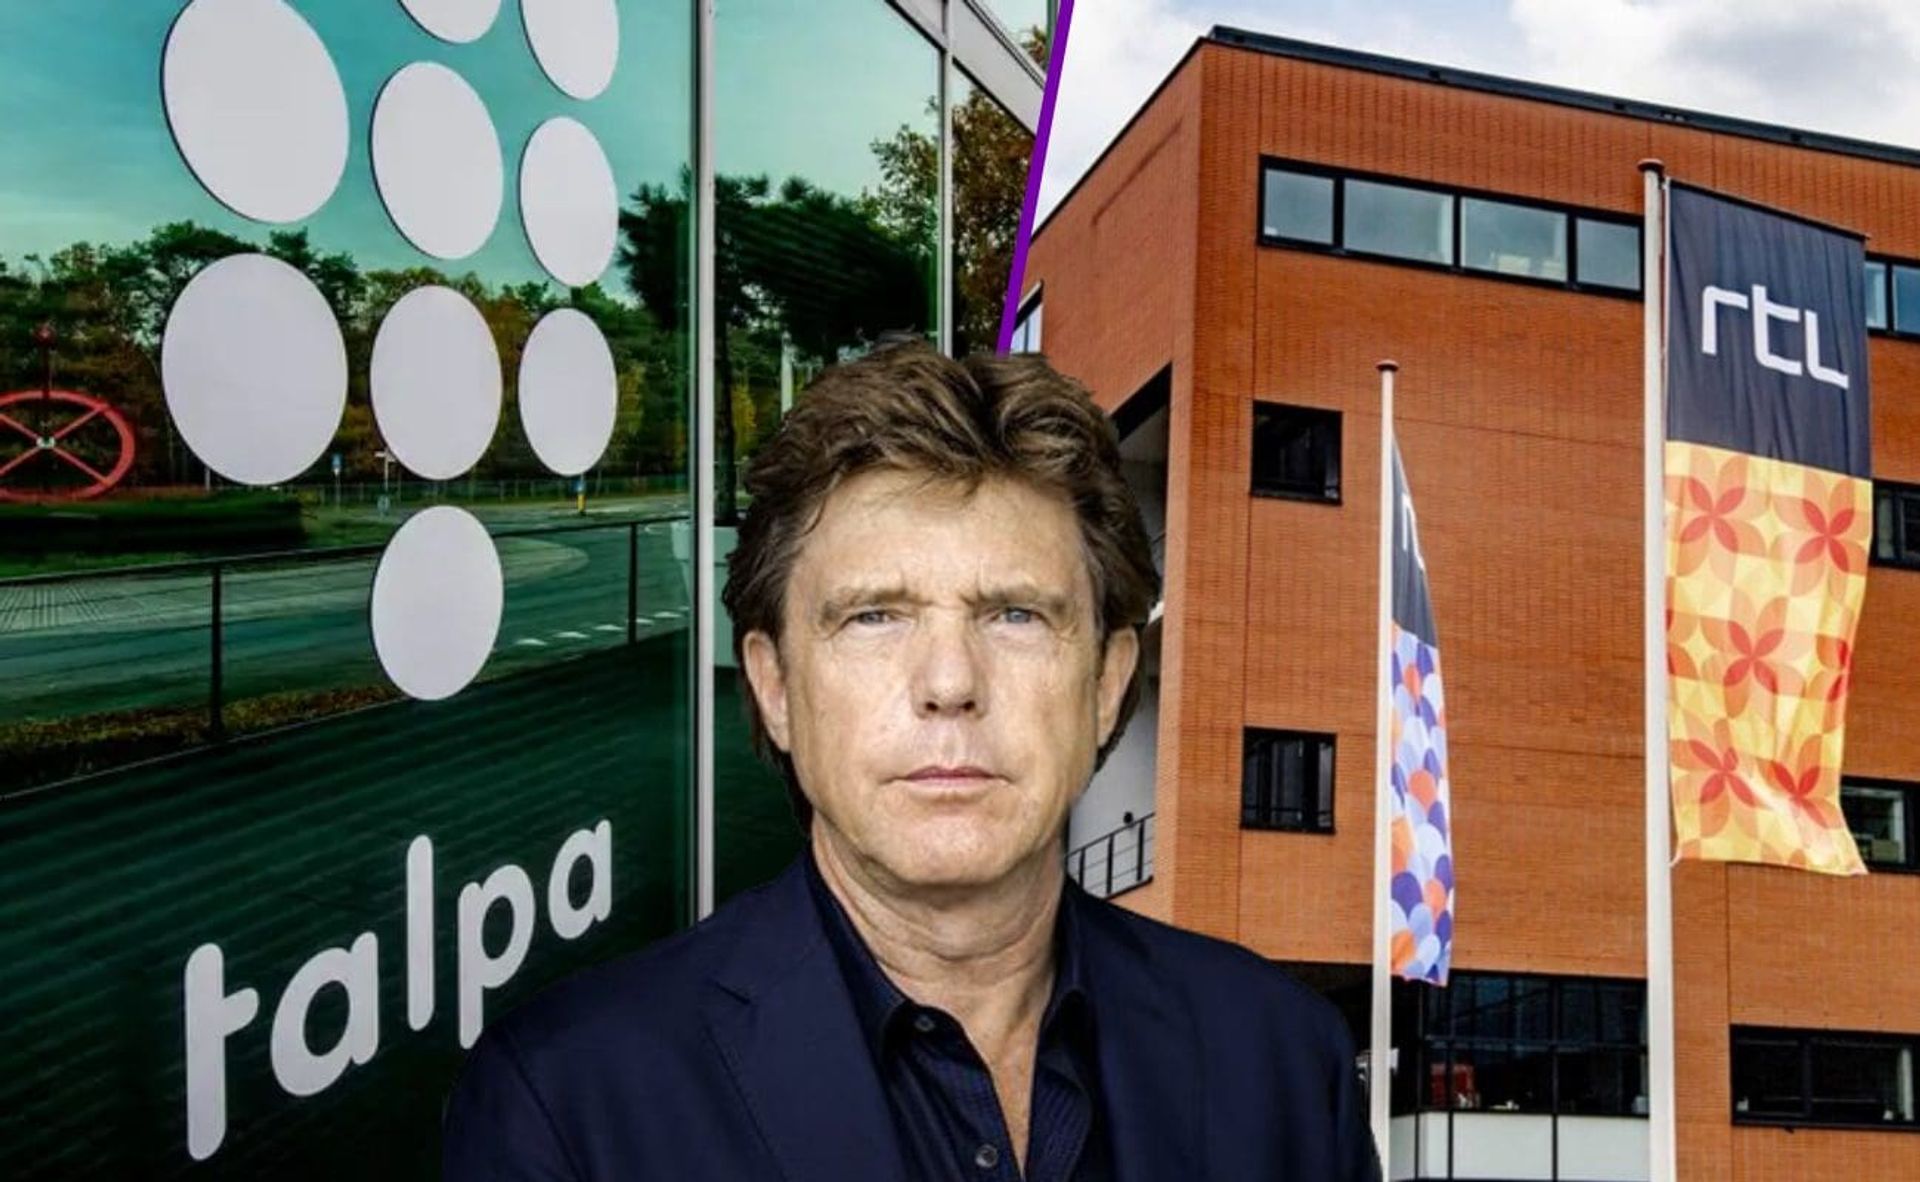 John de Mol faalt wegens verboden fusie tussen Talpa en RTL